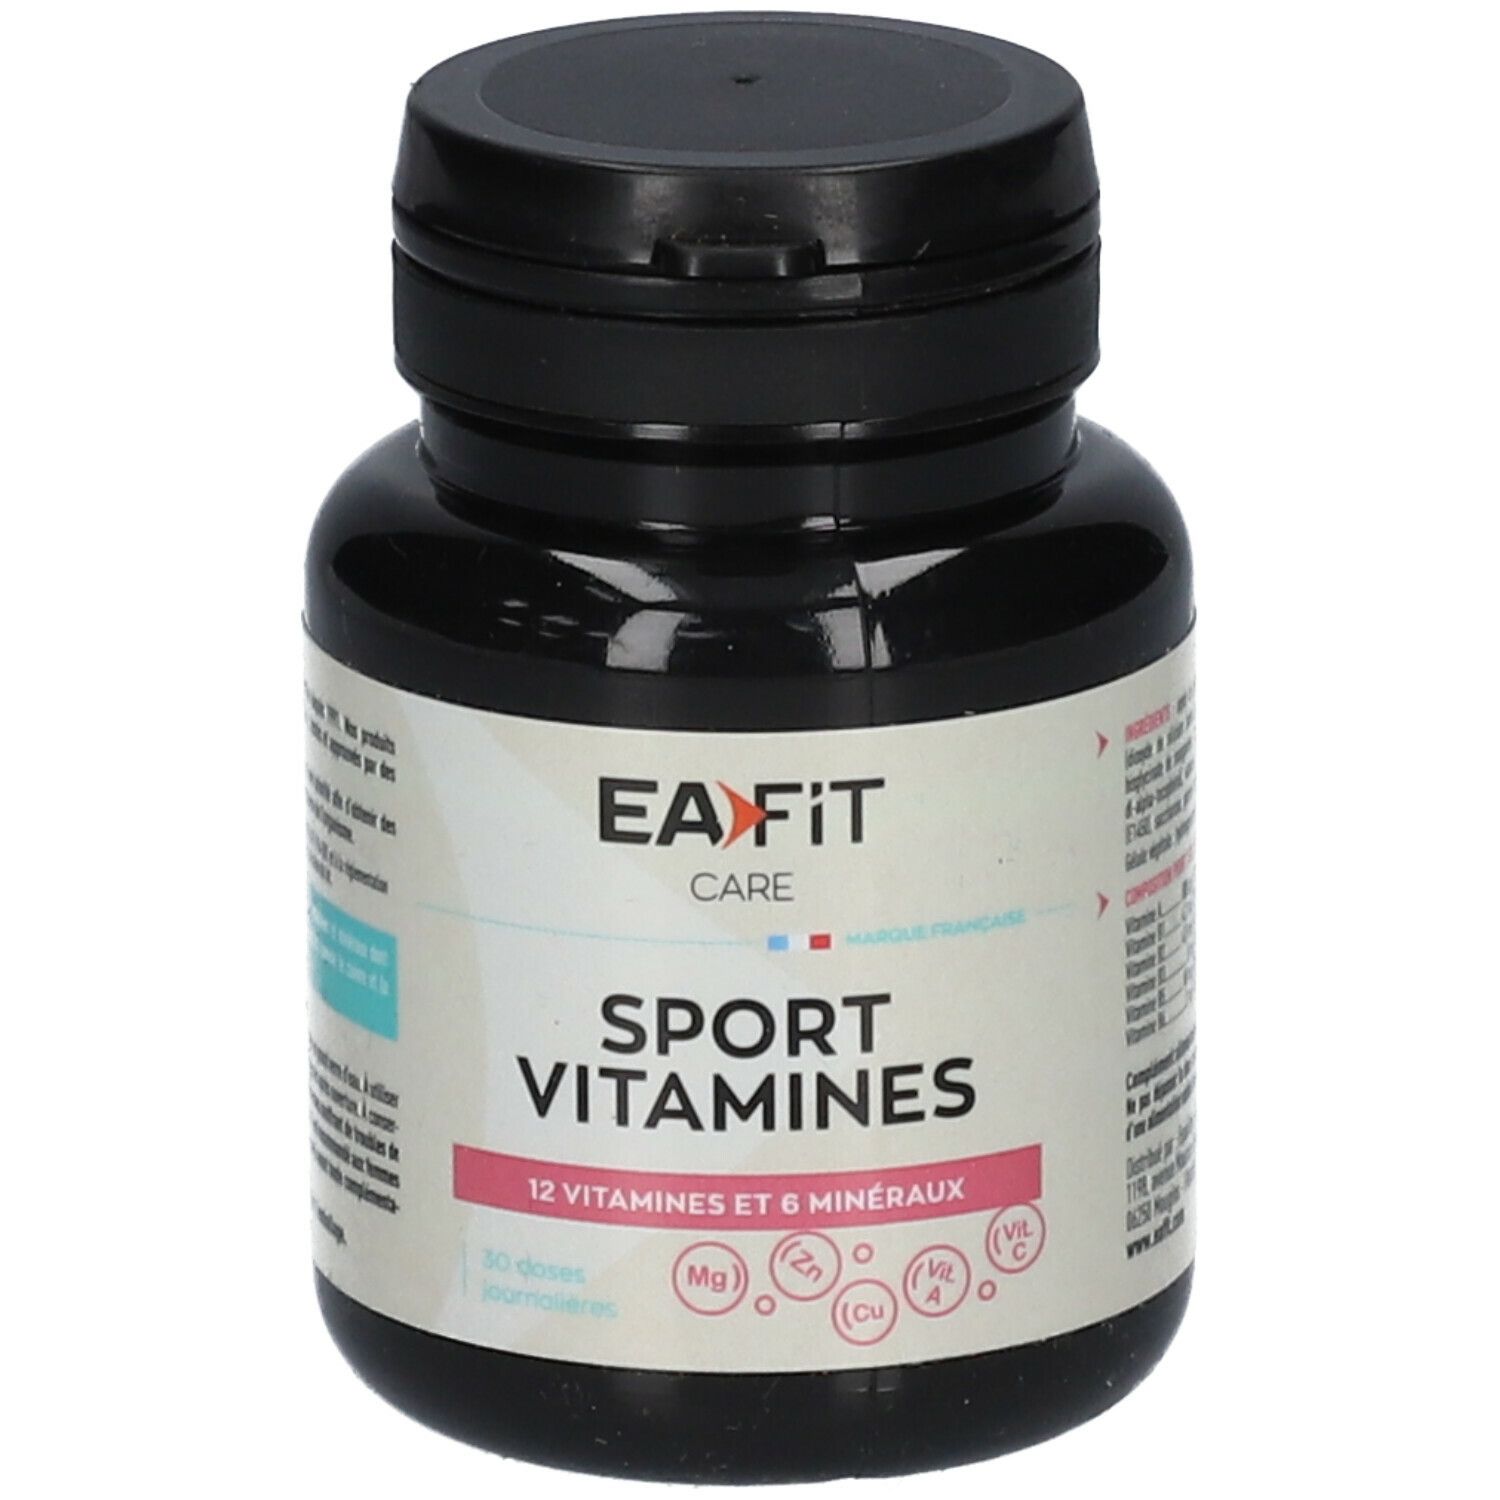 EA FIT Care Sport Vitamines